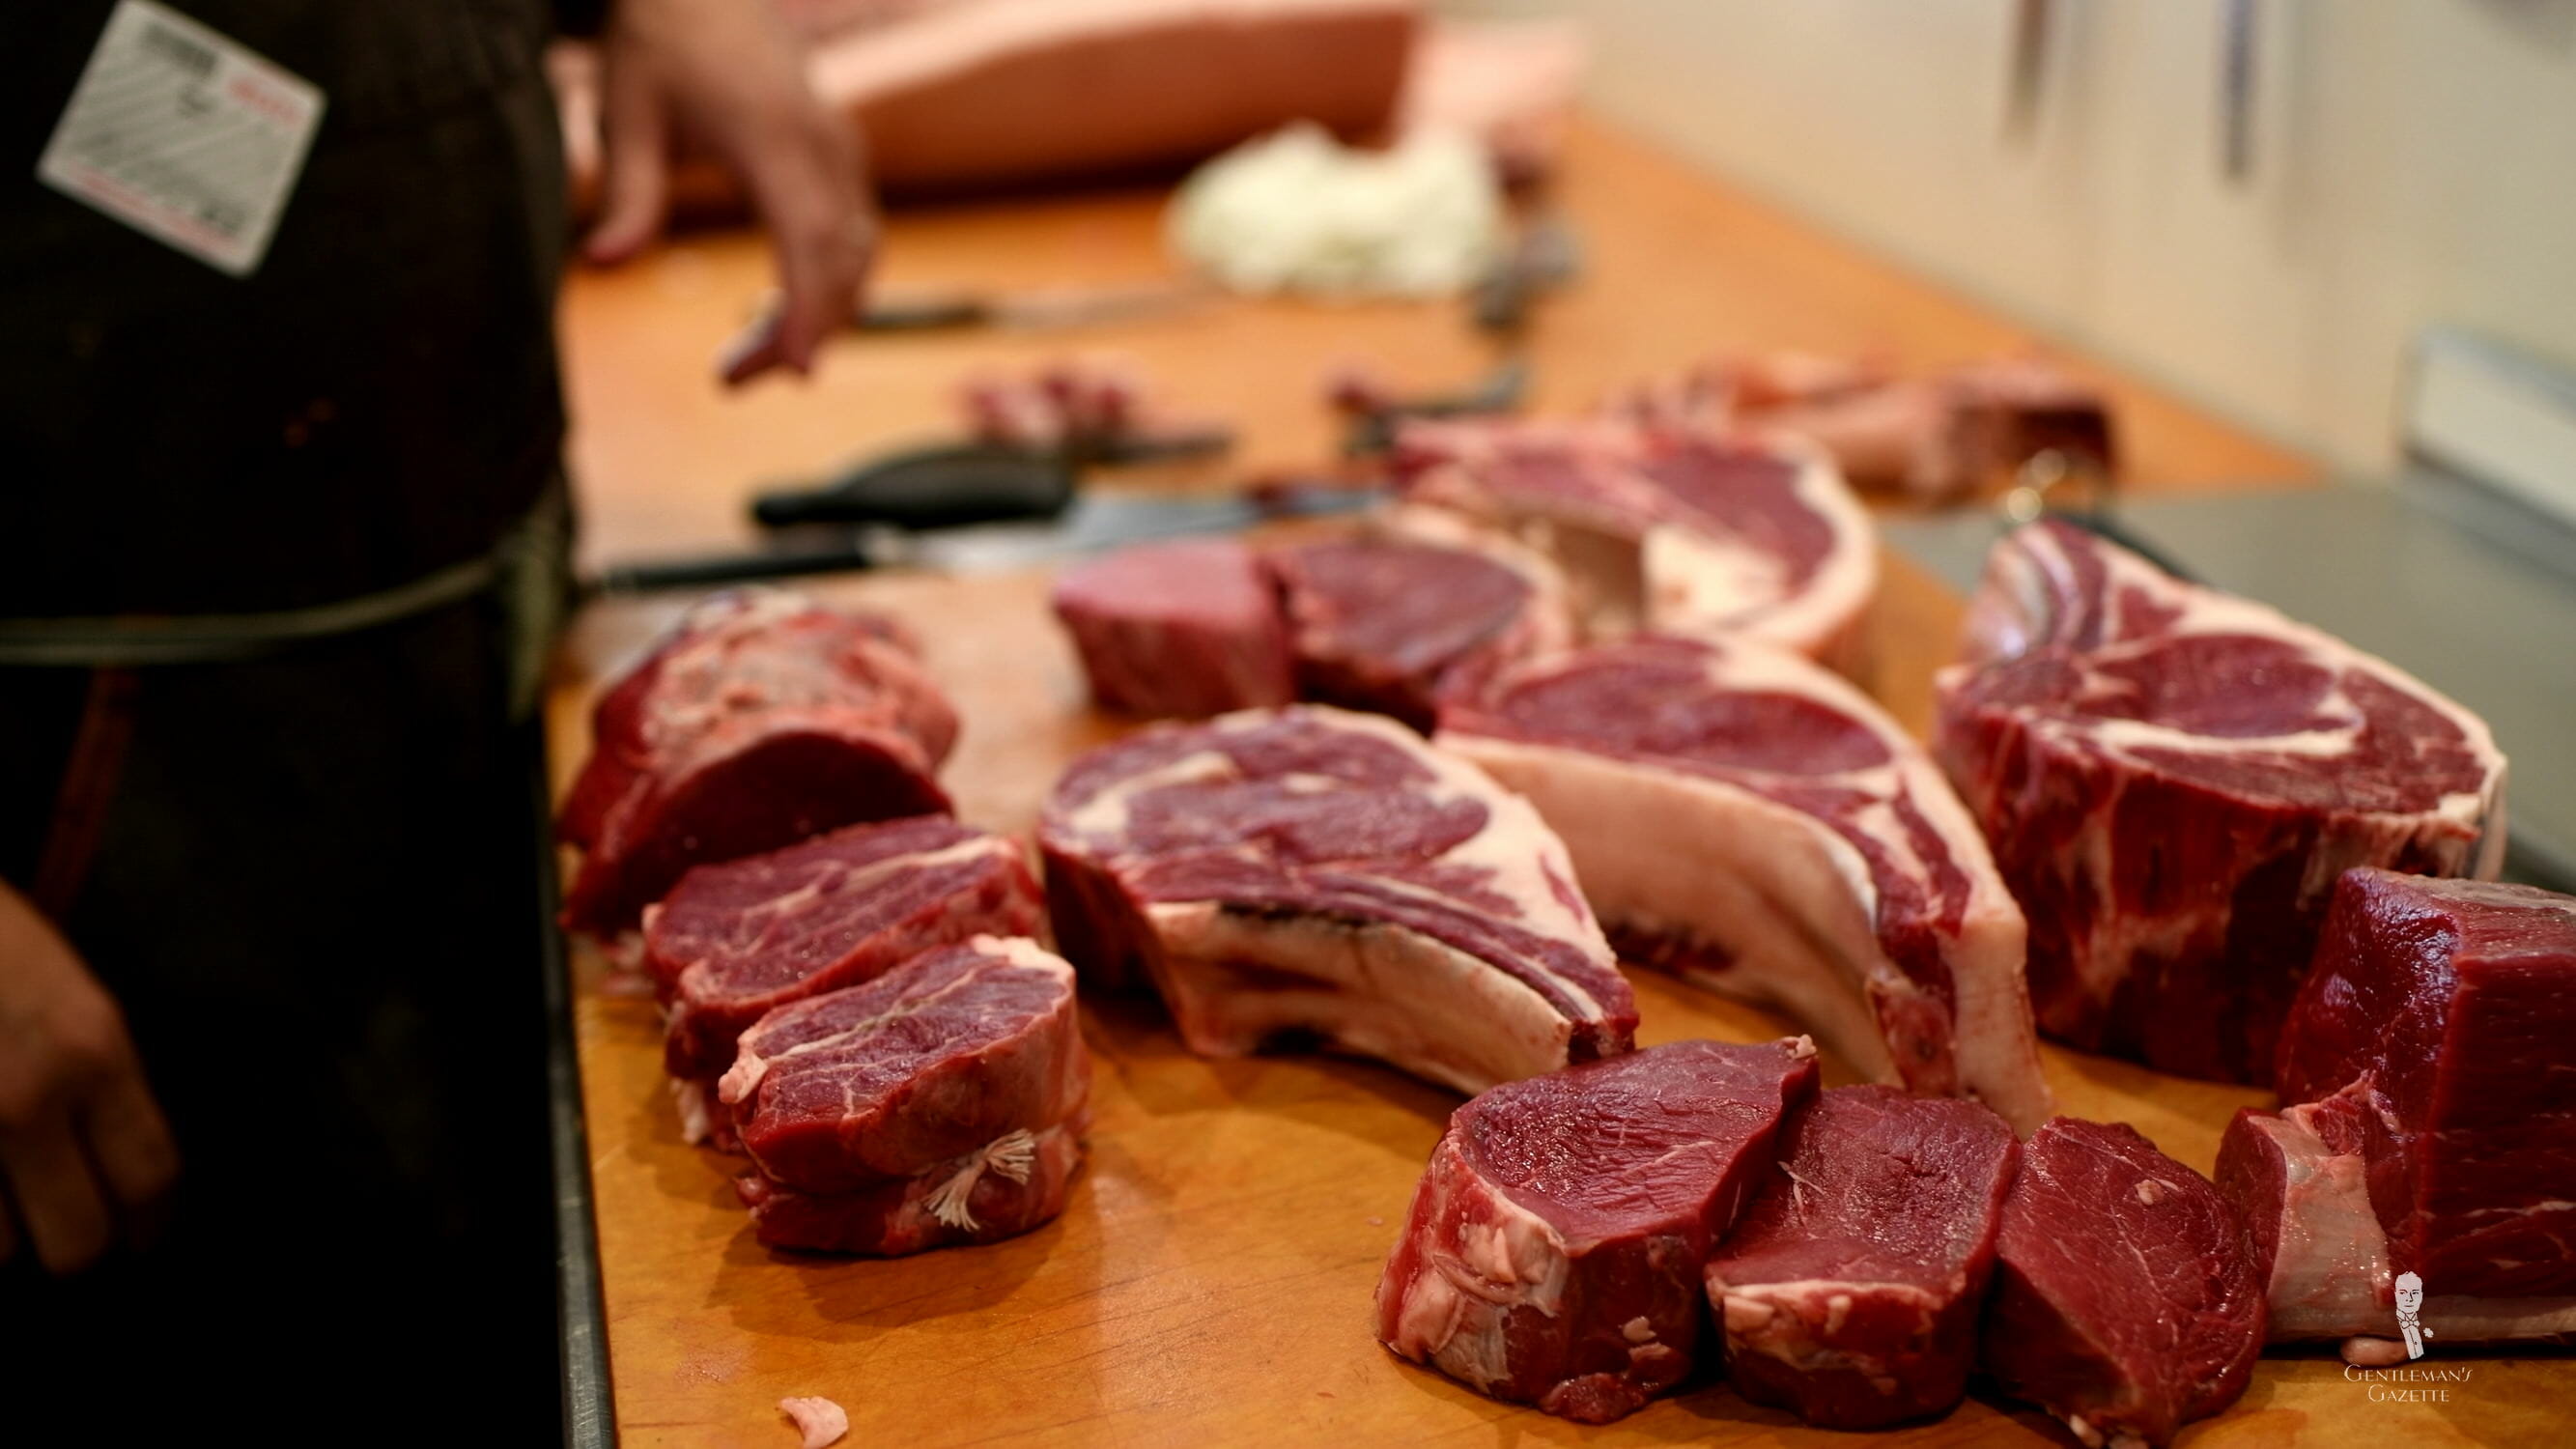 Beautiful steak cuts at Lowry Hill Meats - a local butcher shop in Minneapolis